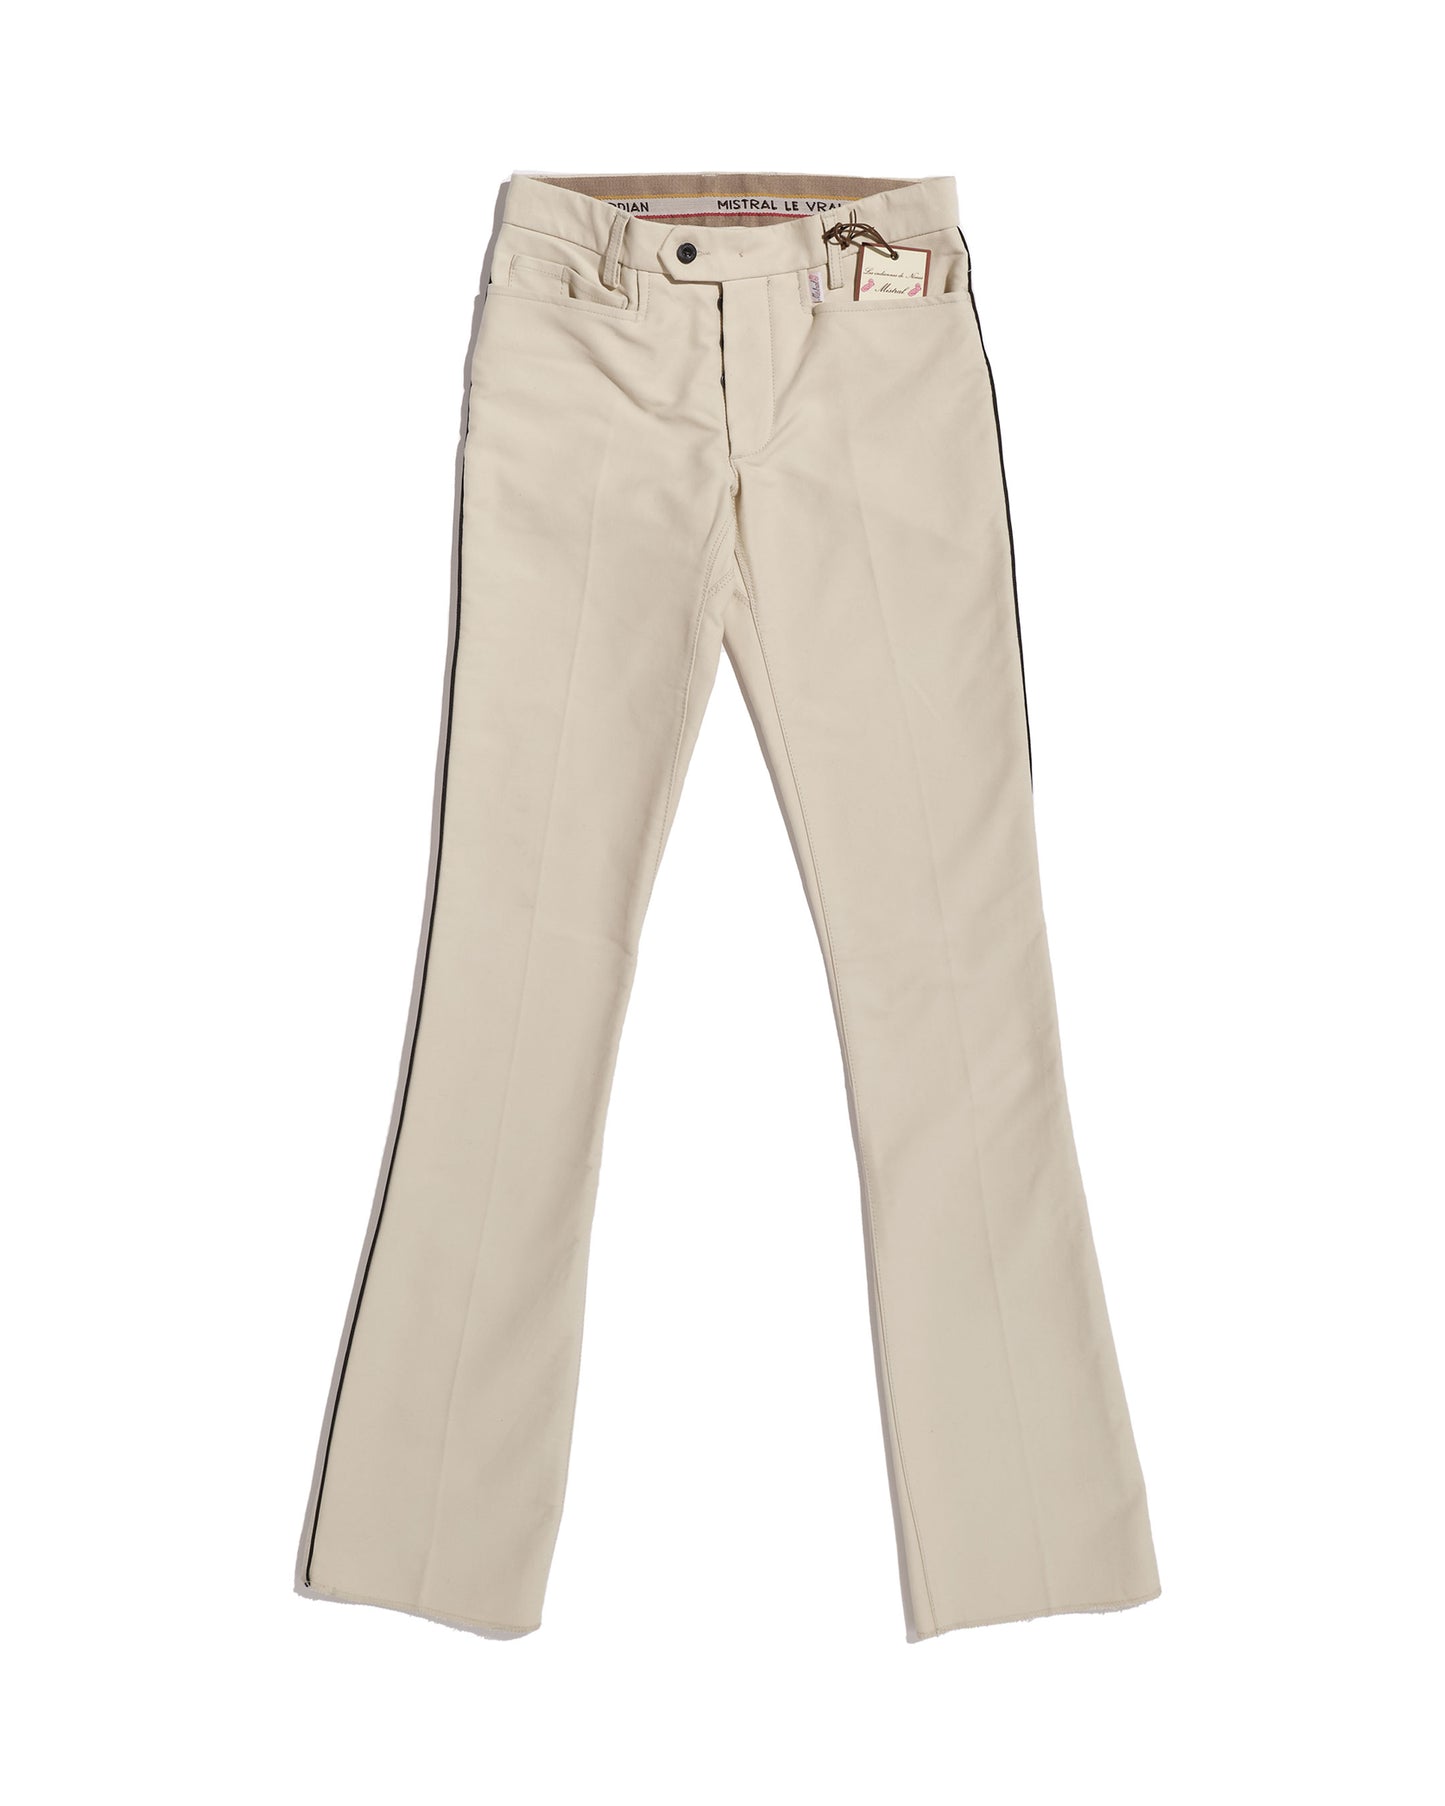 Ecru moleskine gardian pants (discounted size 36)